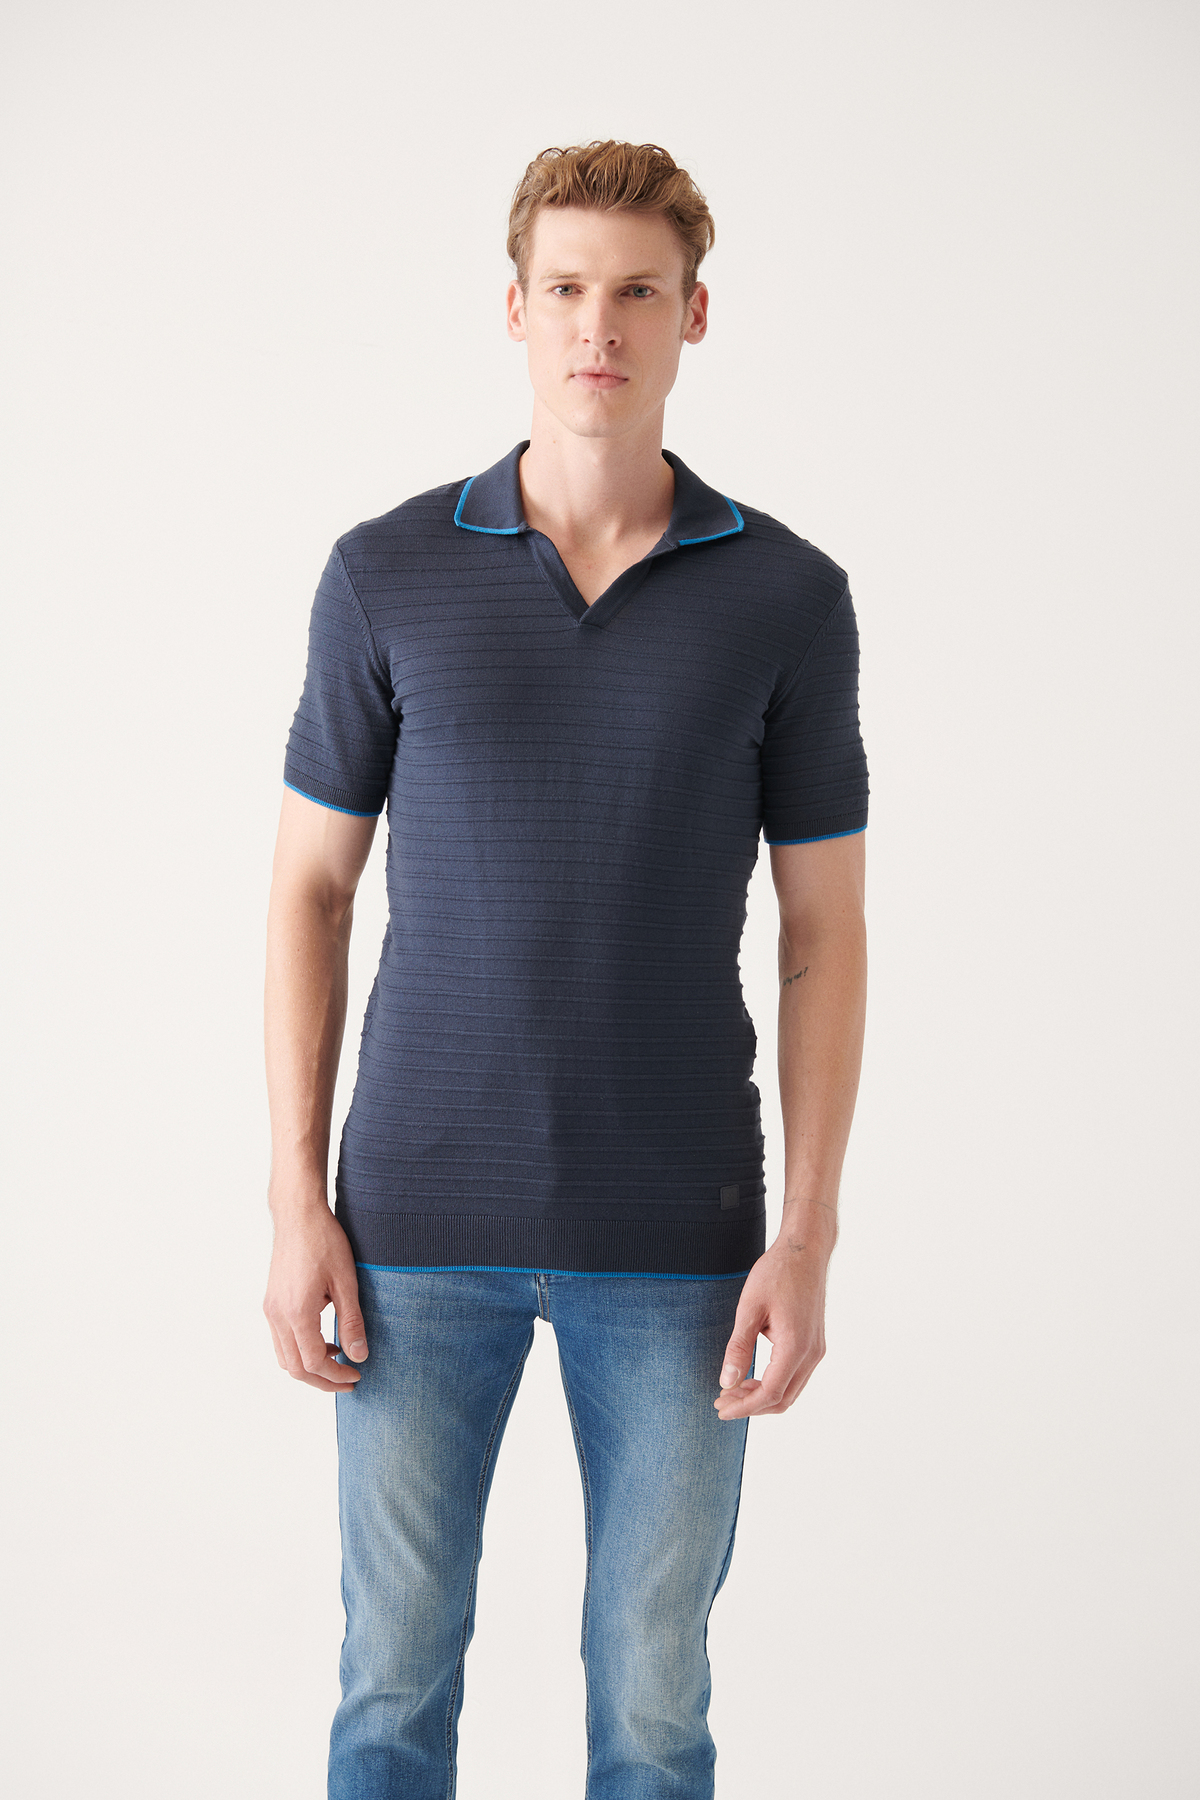 Avva Men's Navy Blue Buttonless Polo Neck Knit Detailed Ribbed Standard Fit Regular Cut Knitwear T-shirt A31y